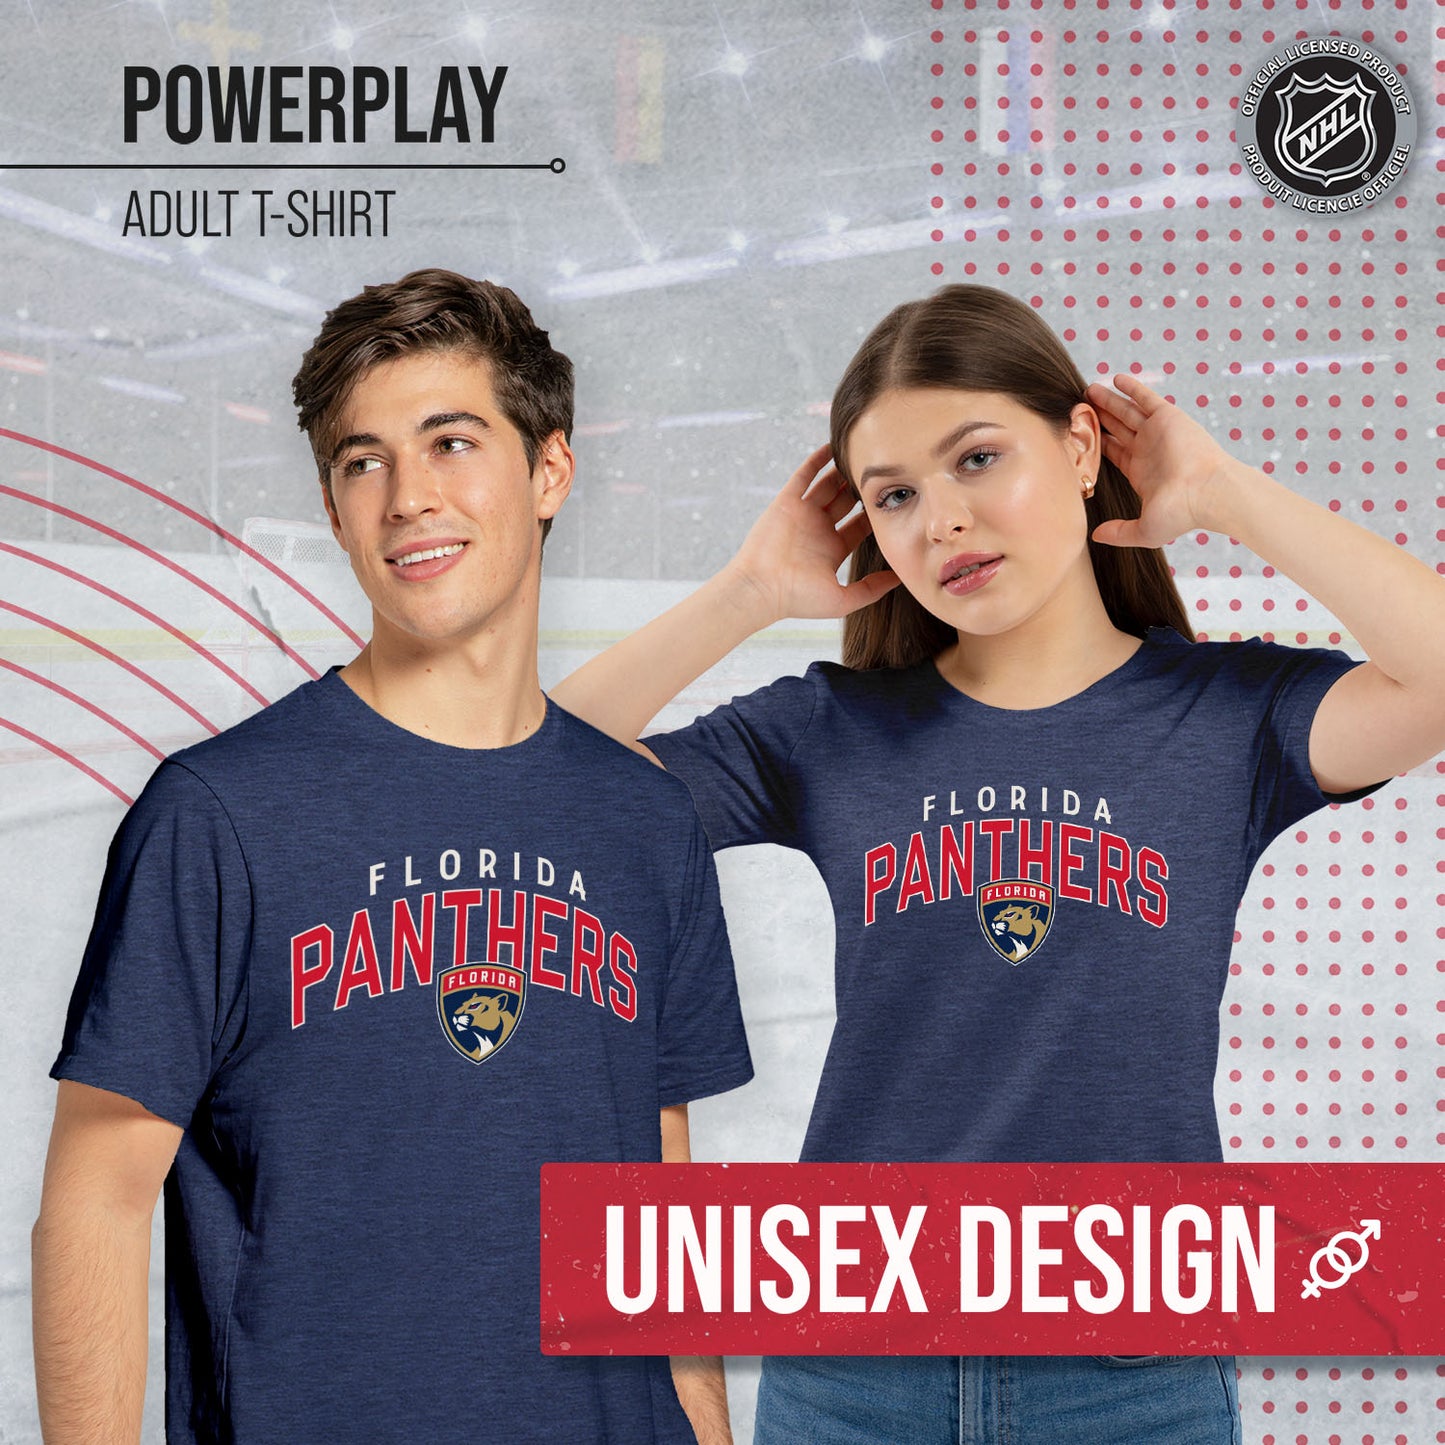 Florida Panthers NHL Adult Powerplay Heathered Unisex T-Shirt - Navy